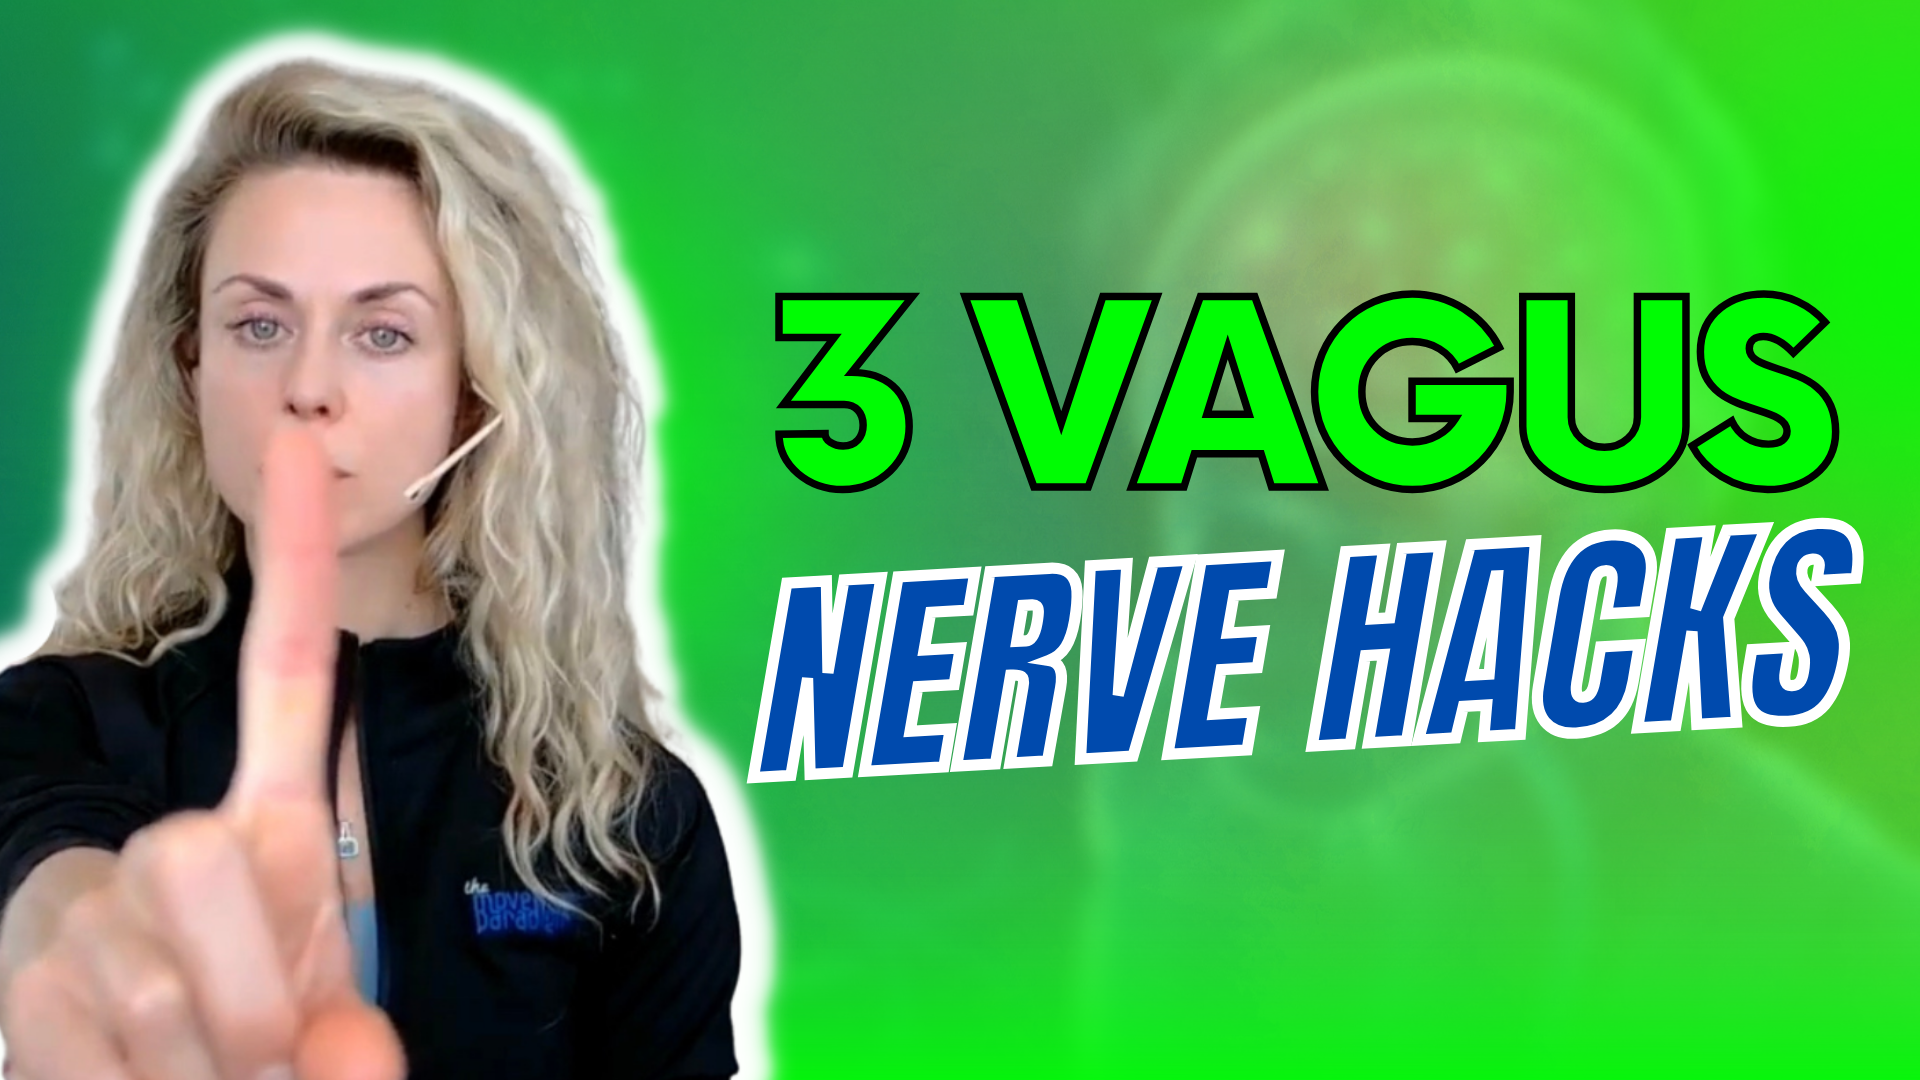 3 Vagus Nerve Hacks